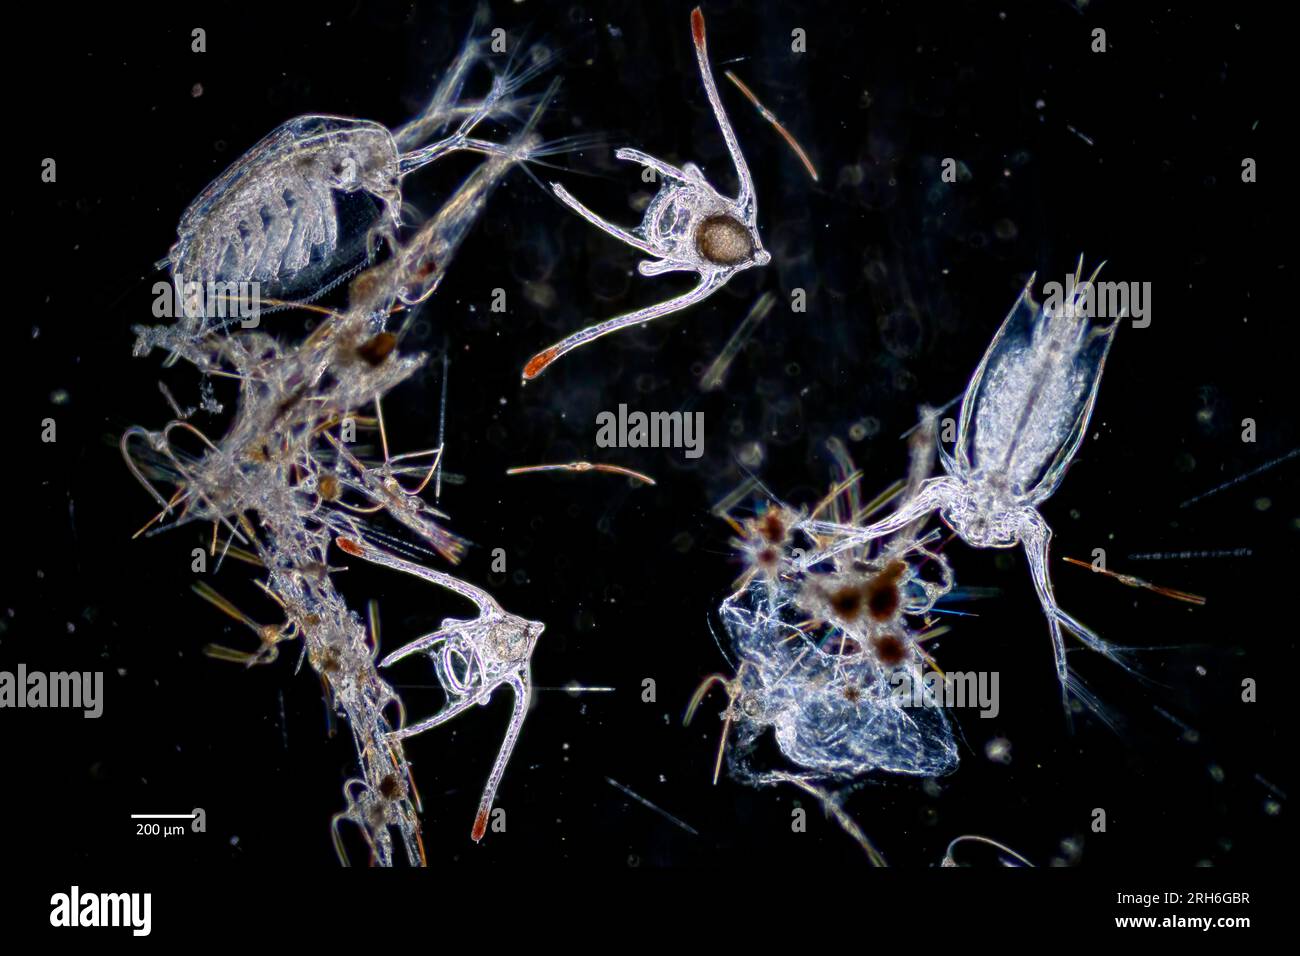 The ctenopod Penila avirostris (Branchiopoda, Ctenopoda, Sididae) and larva of the brittle star Ophiura albida in a plankton samle from waters off sou Stock Photo